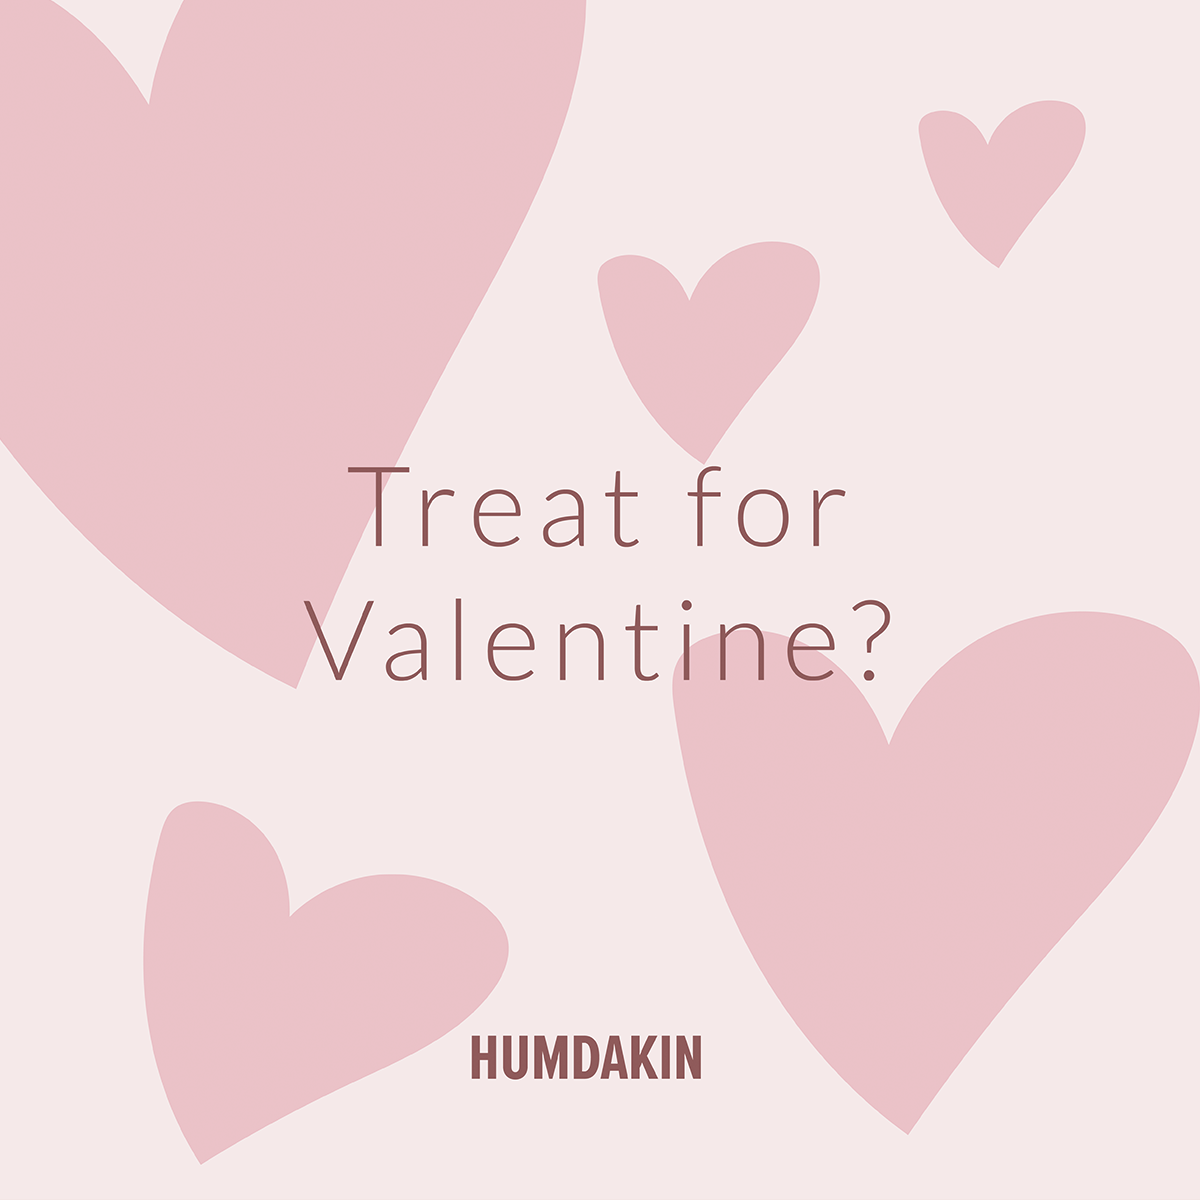 Valentines treats with Humdakin